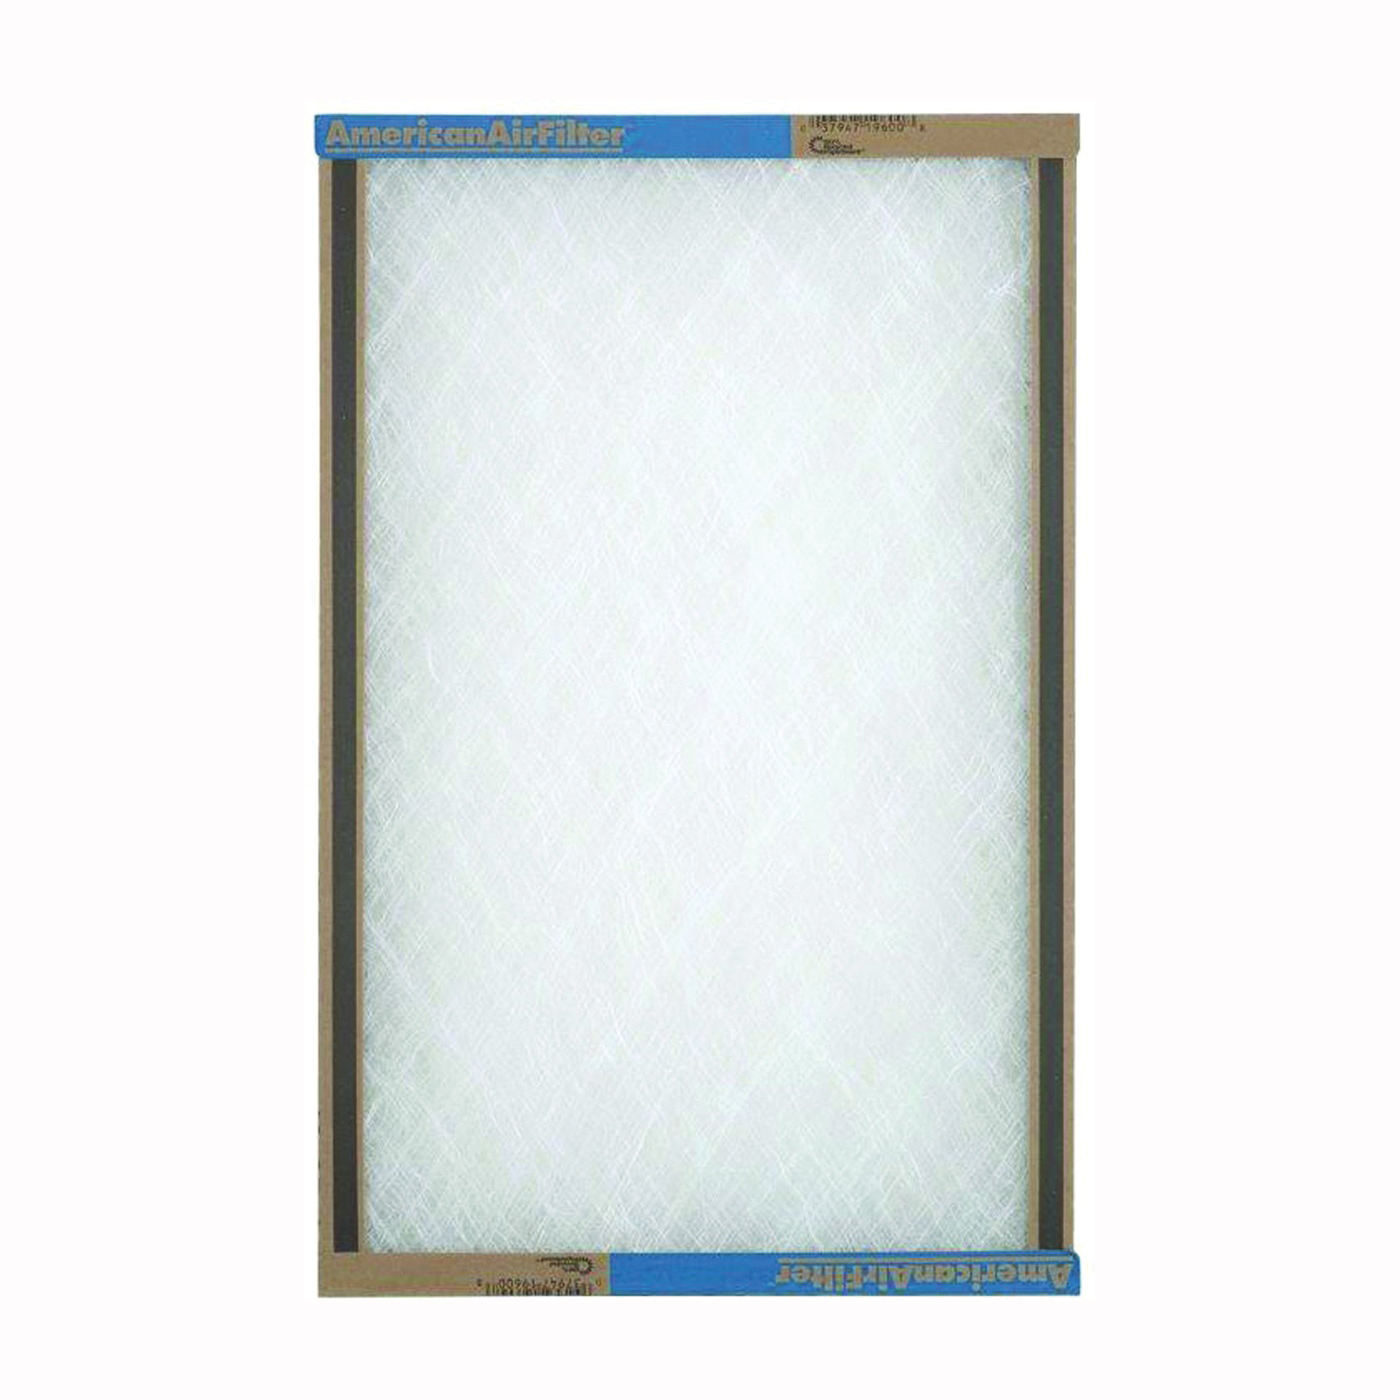 220-800-051 Panel Air Filter, 25 x 20 x 1, Chipboard Frame